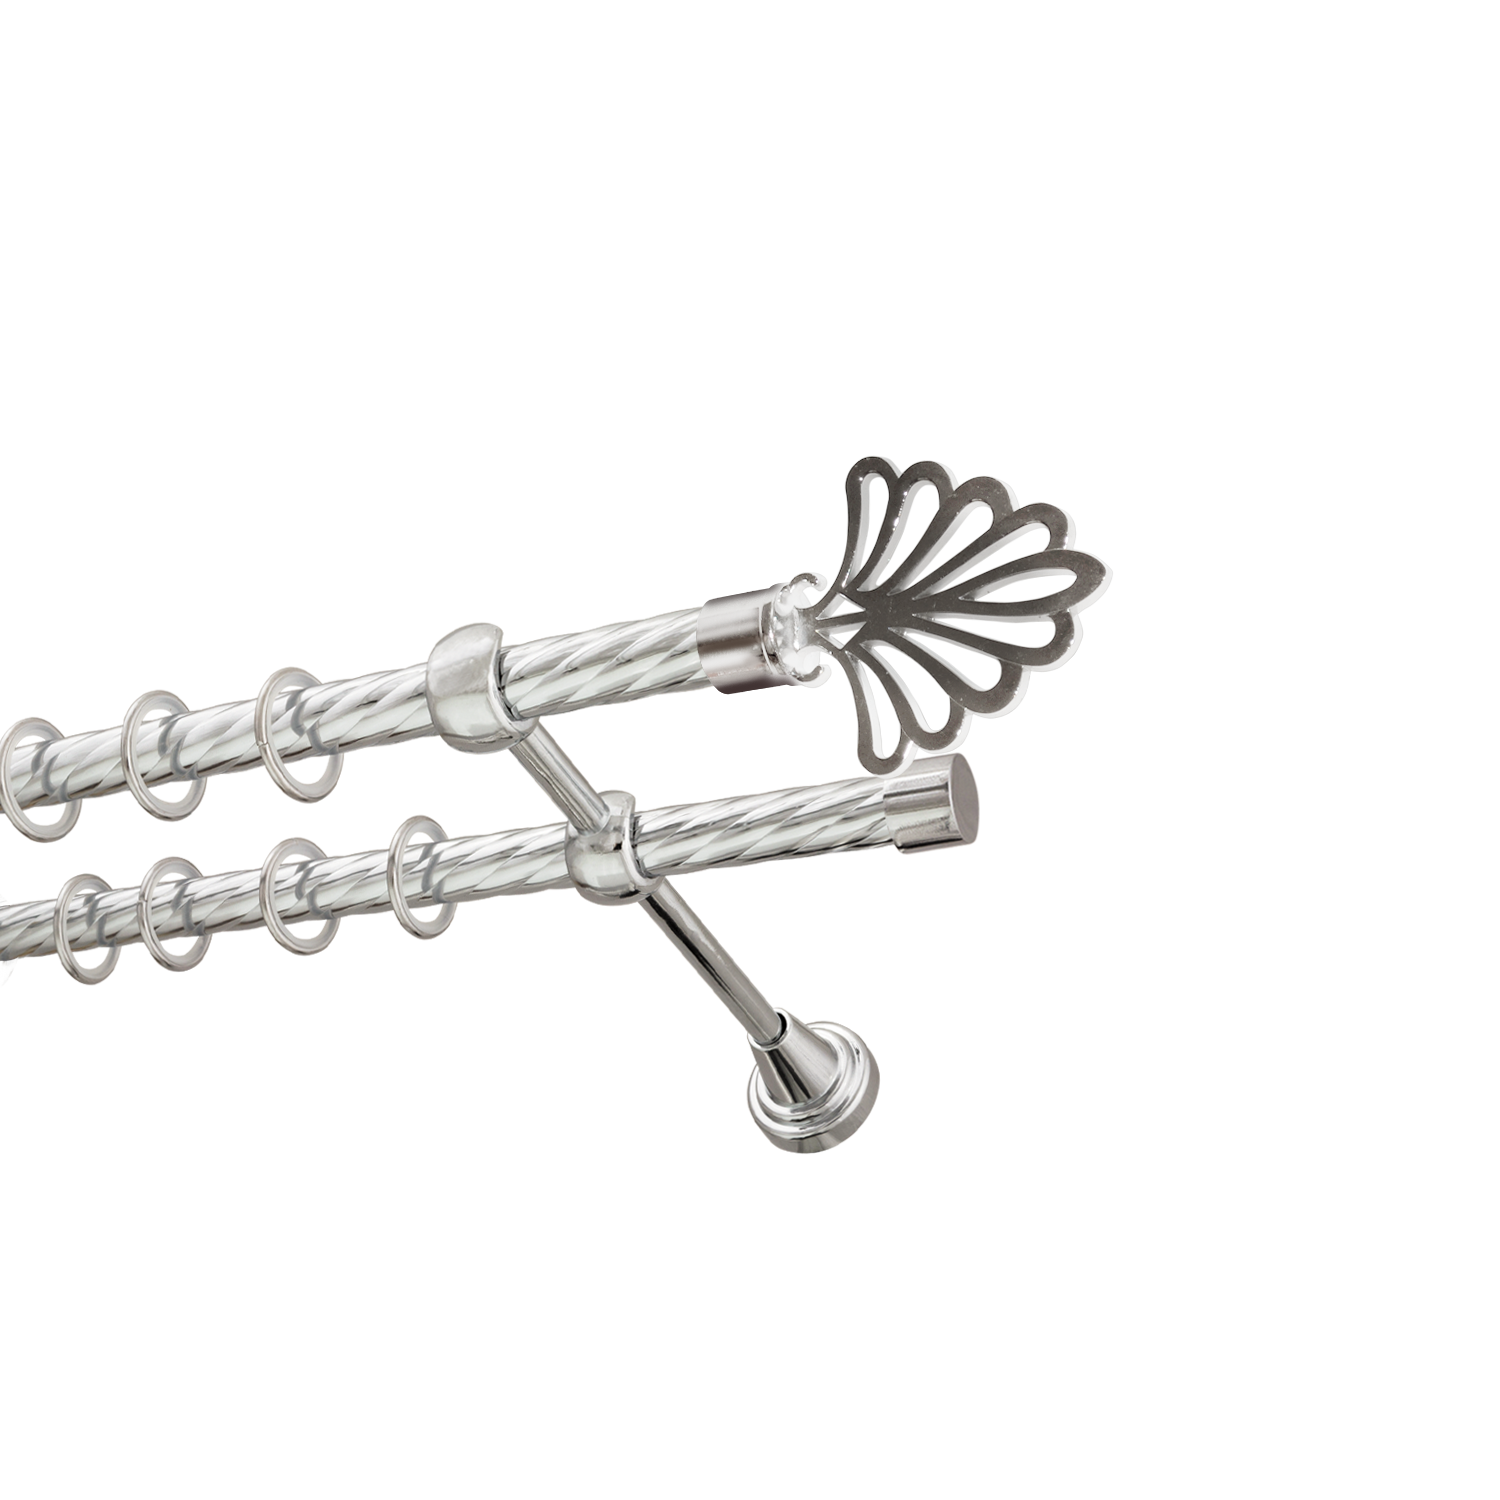 Металлический карниз для штор Бутик, двухрядный 16/16 мм, серебро, витая штанга, длина 140 см - фото Wikidecor.ru